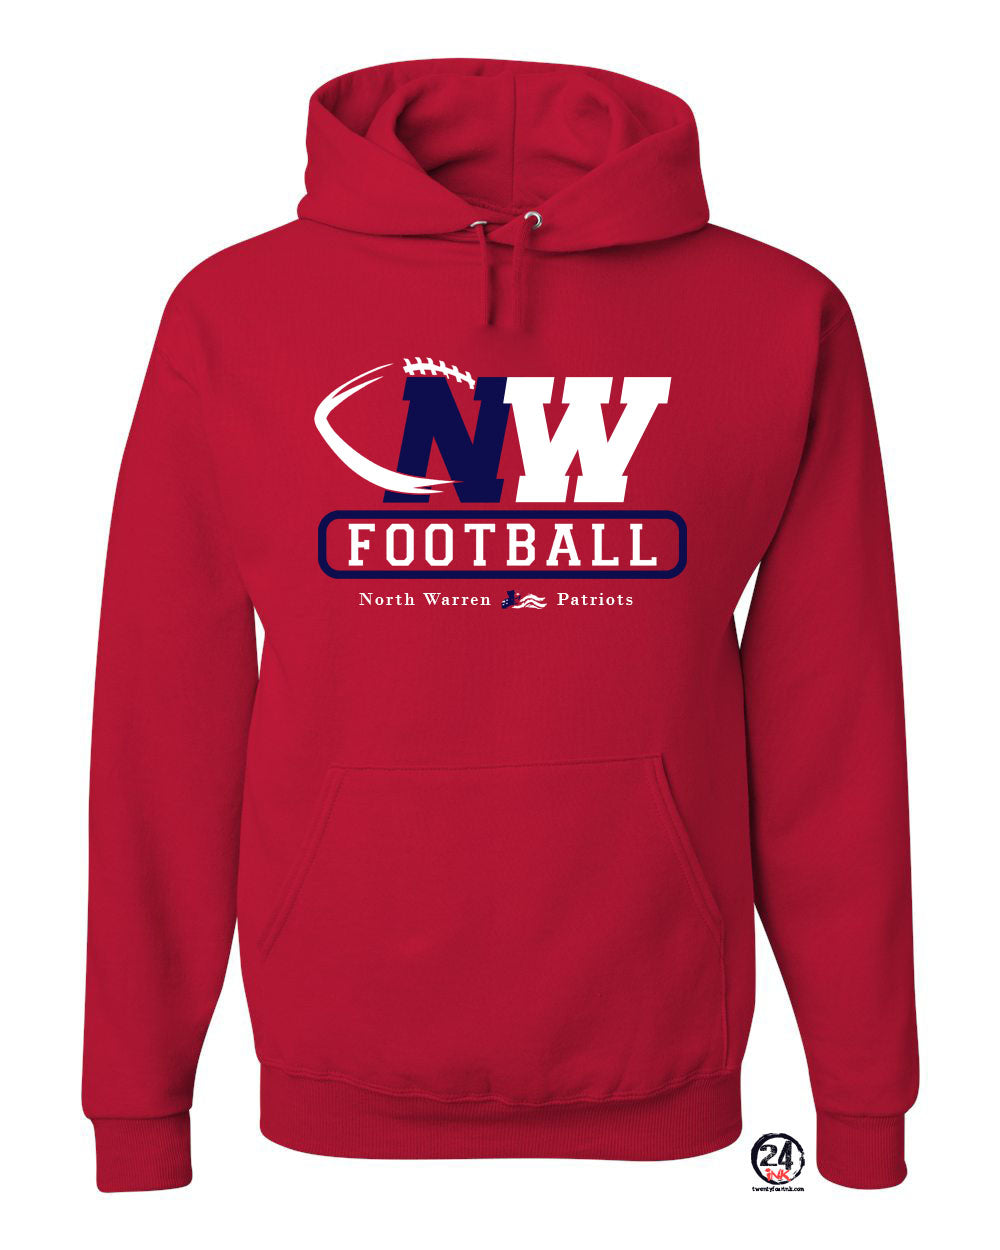 NW Football Design 3 Hooded Sweatshirt